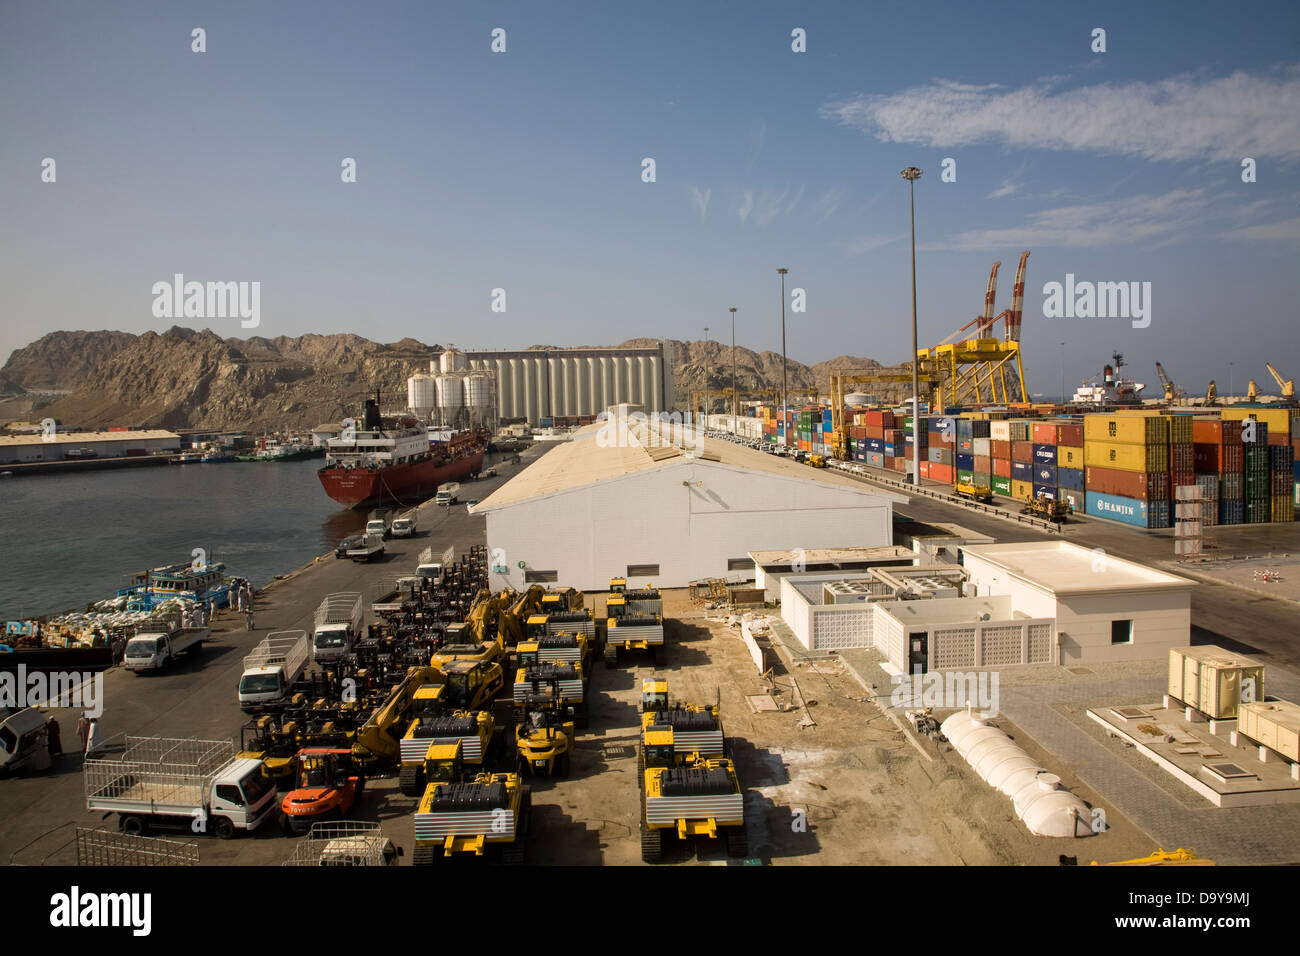 Sultan Qaboos Port, Muscat, Oman. Stock Photo